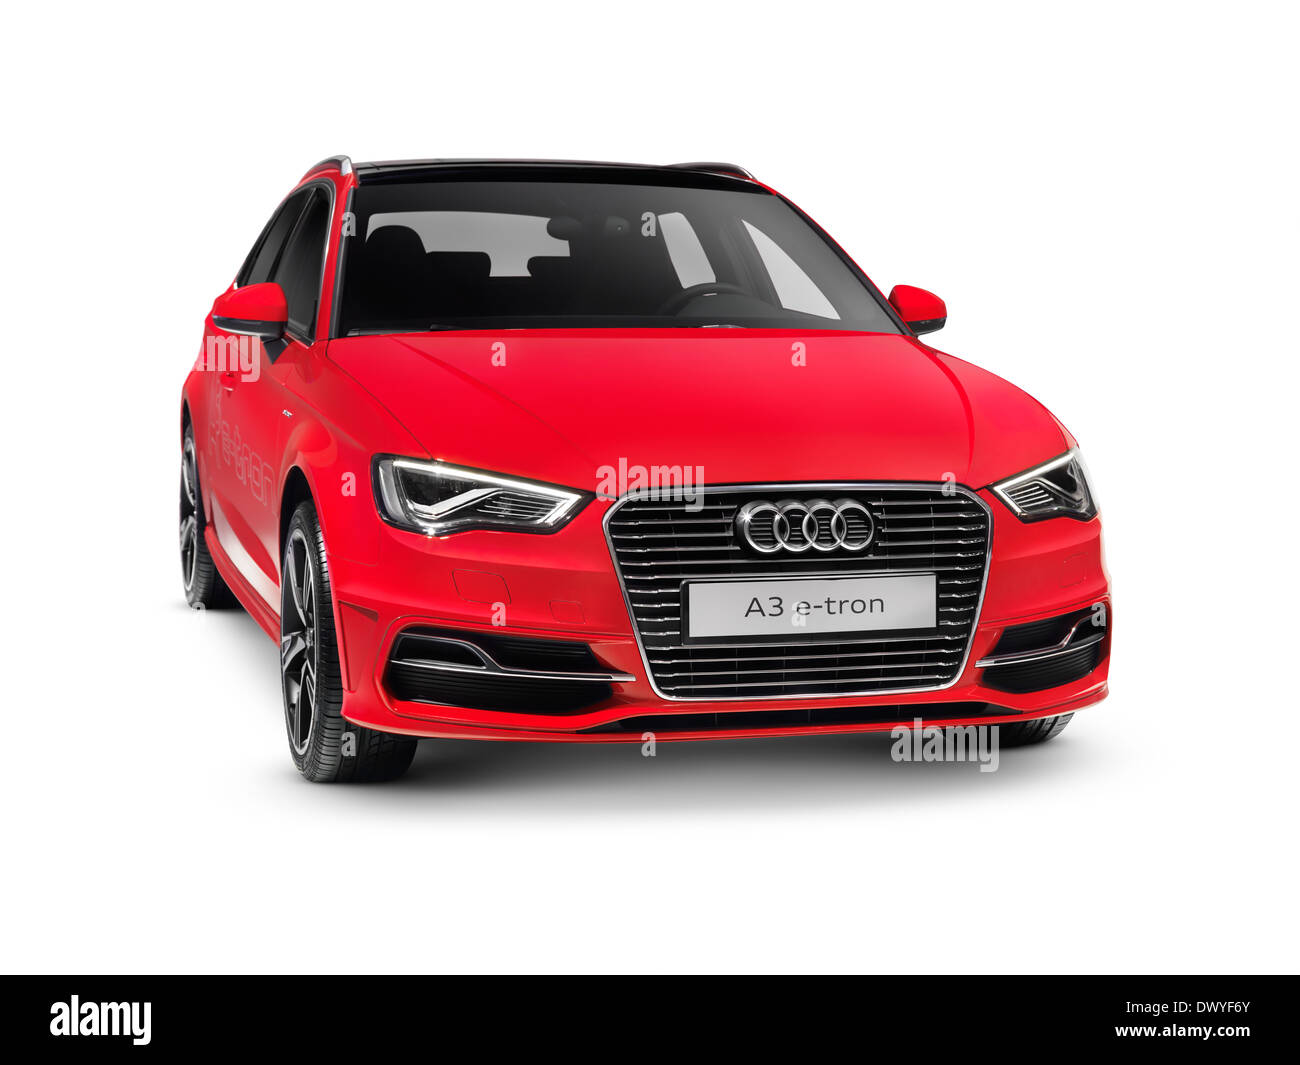 Audi auto -Fotos und -Bildmaterial in hoher Auflösung – Alamy